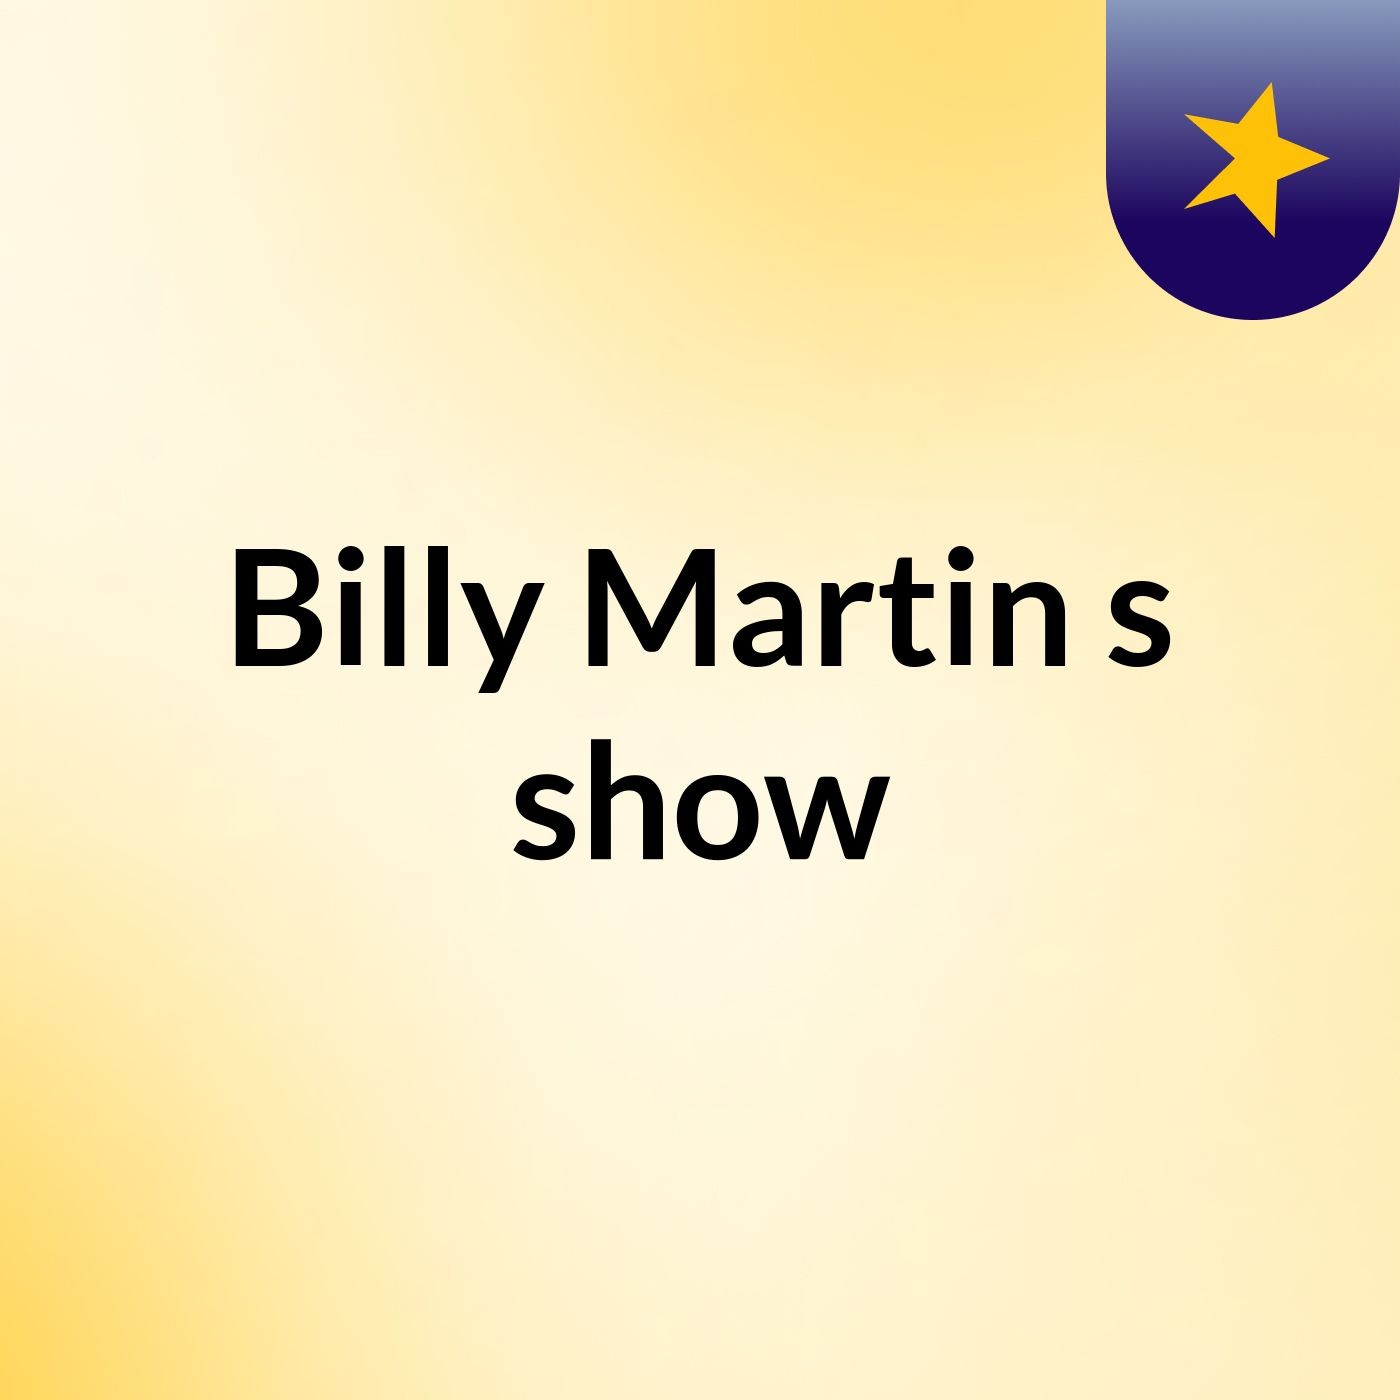 Billy Martin's show